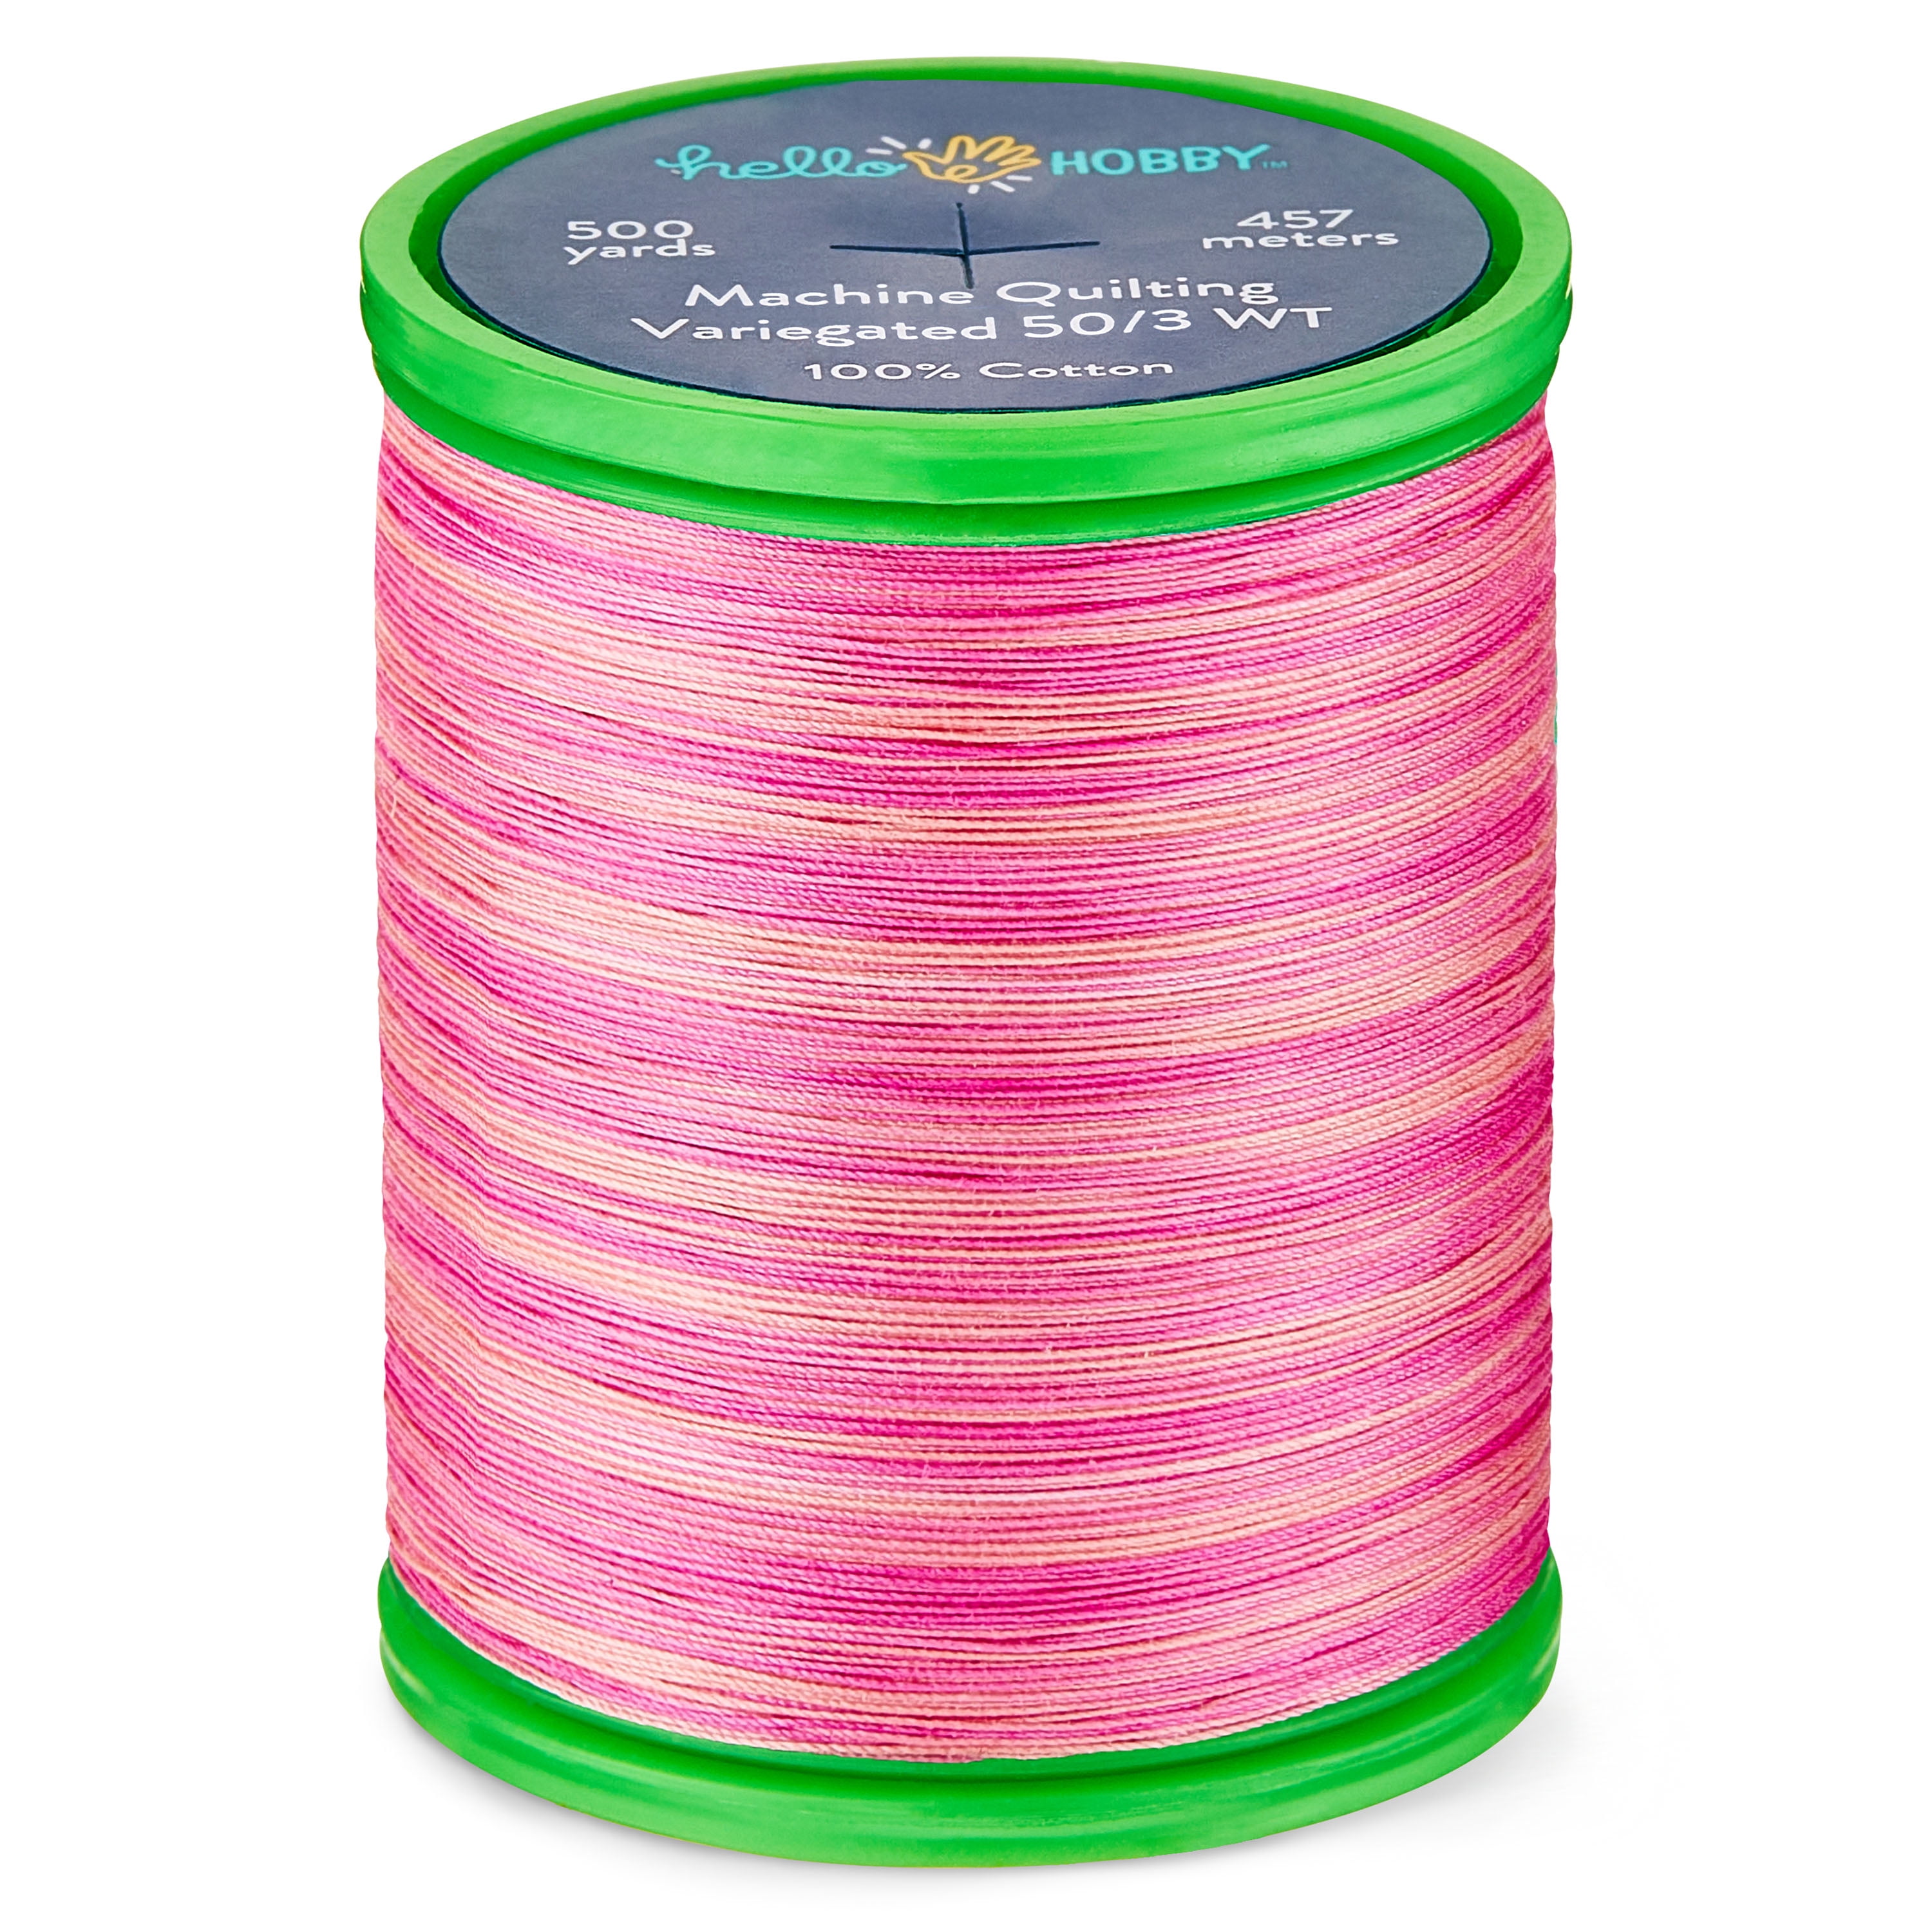 Robot-gxg 50 Colors Embroidery Thread Floss Bobbins Needles Set Friendship Bracelet String Cross Stitch Cord Kit Random Color, Size: As Picture Shown